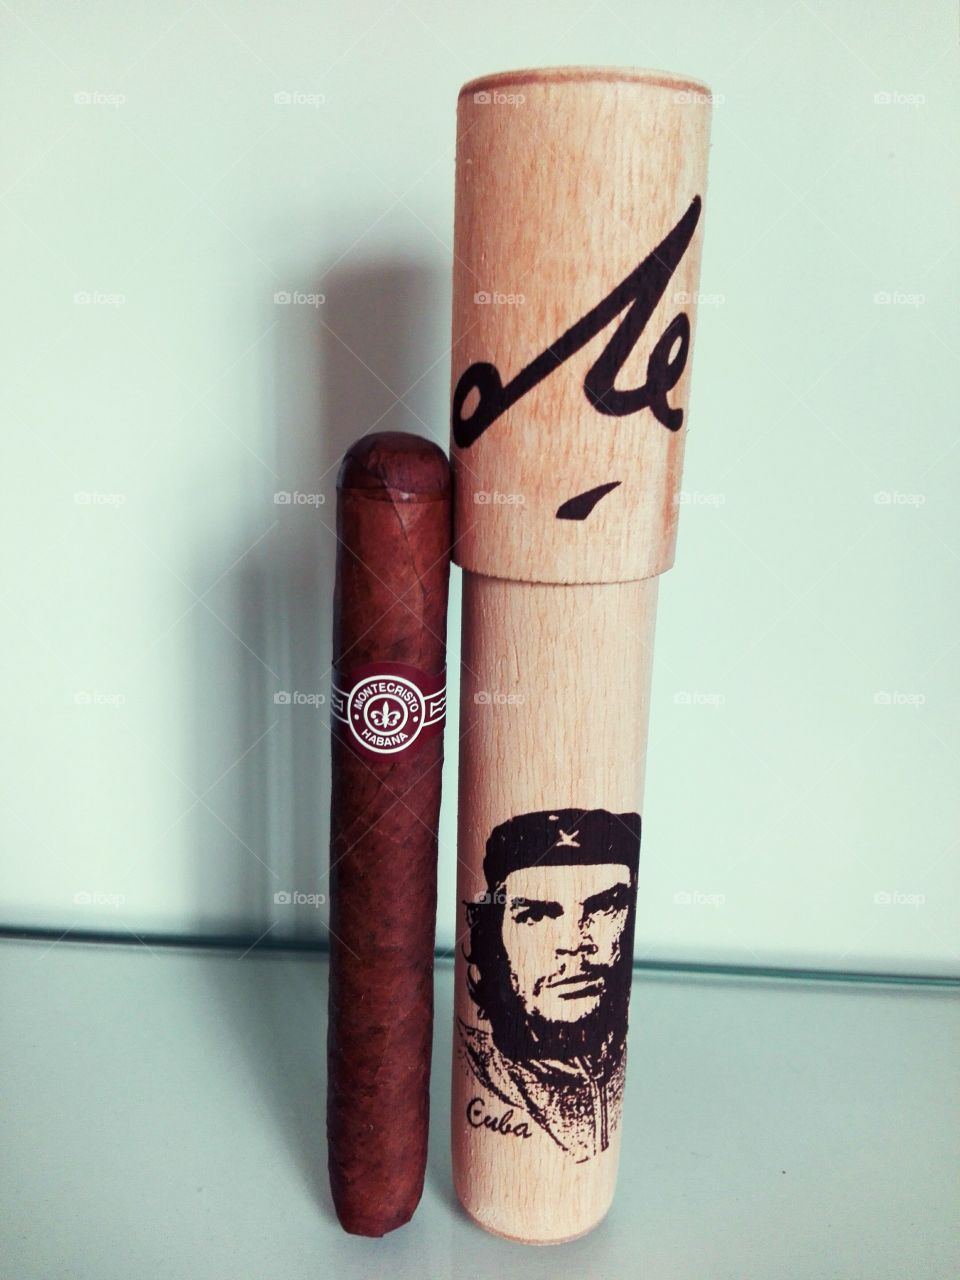 Montecrisro cigar